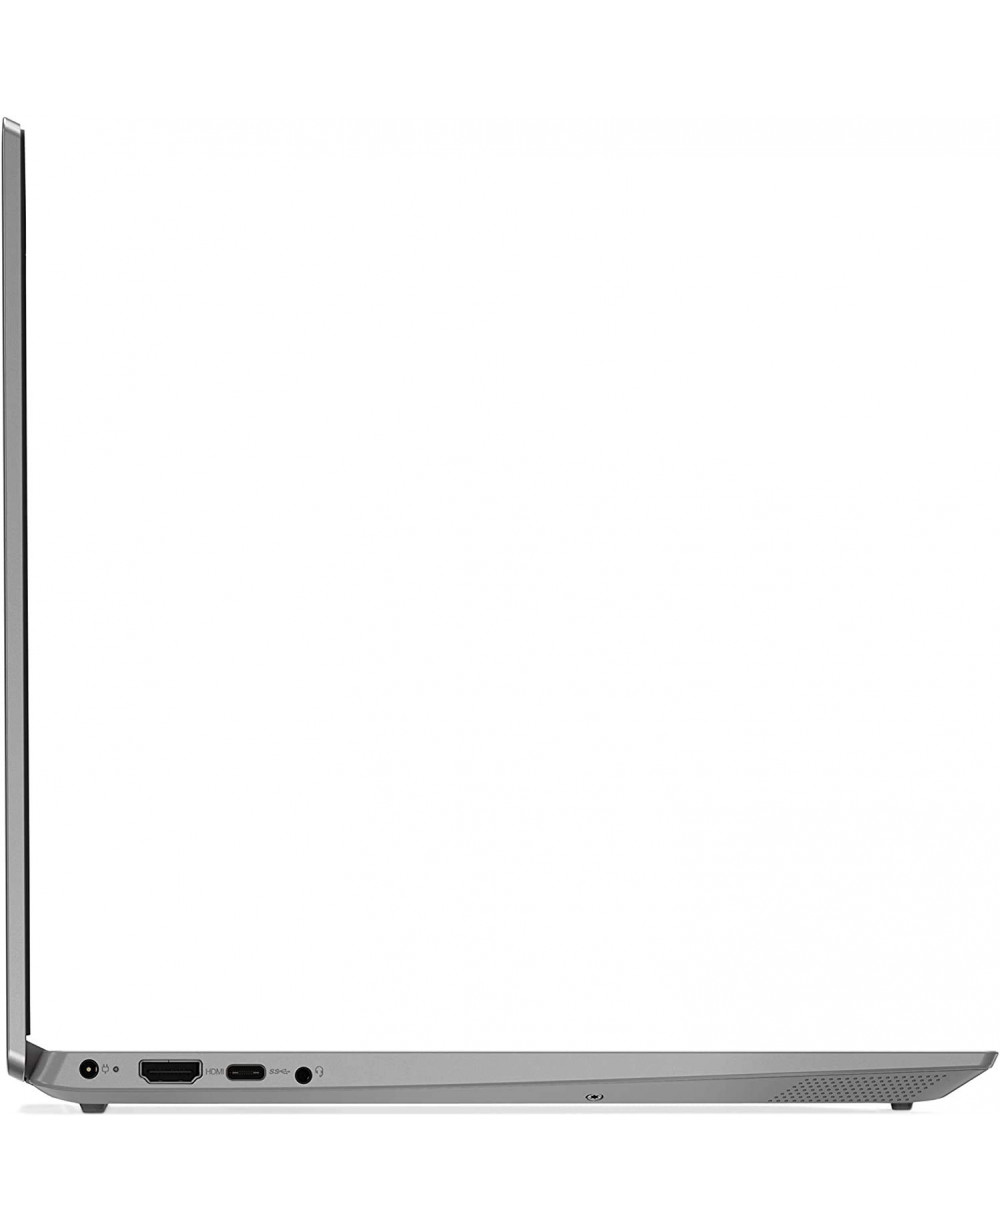 Lenovo IdeaPad S340 Intel Core i7-1065G7 Processor, 8Gb Ram 256Gb SSD 